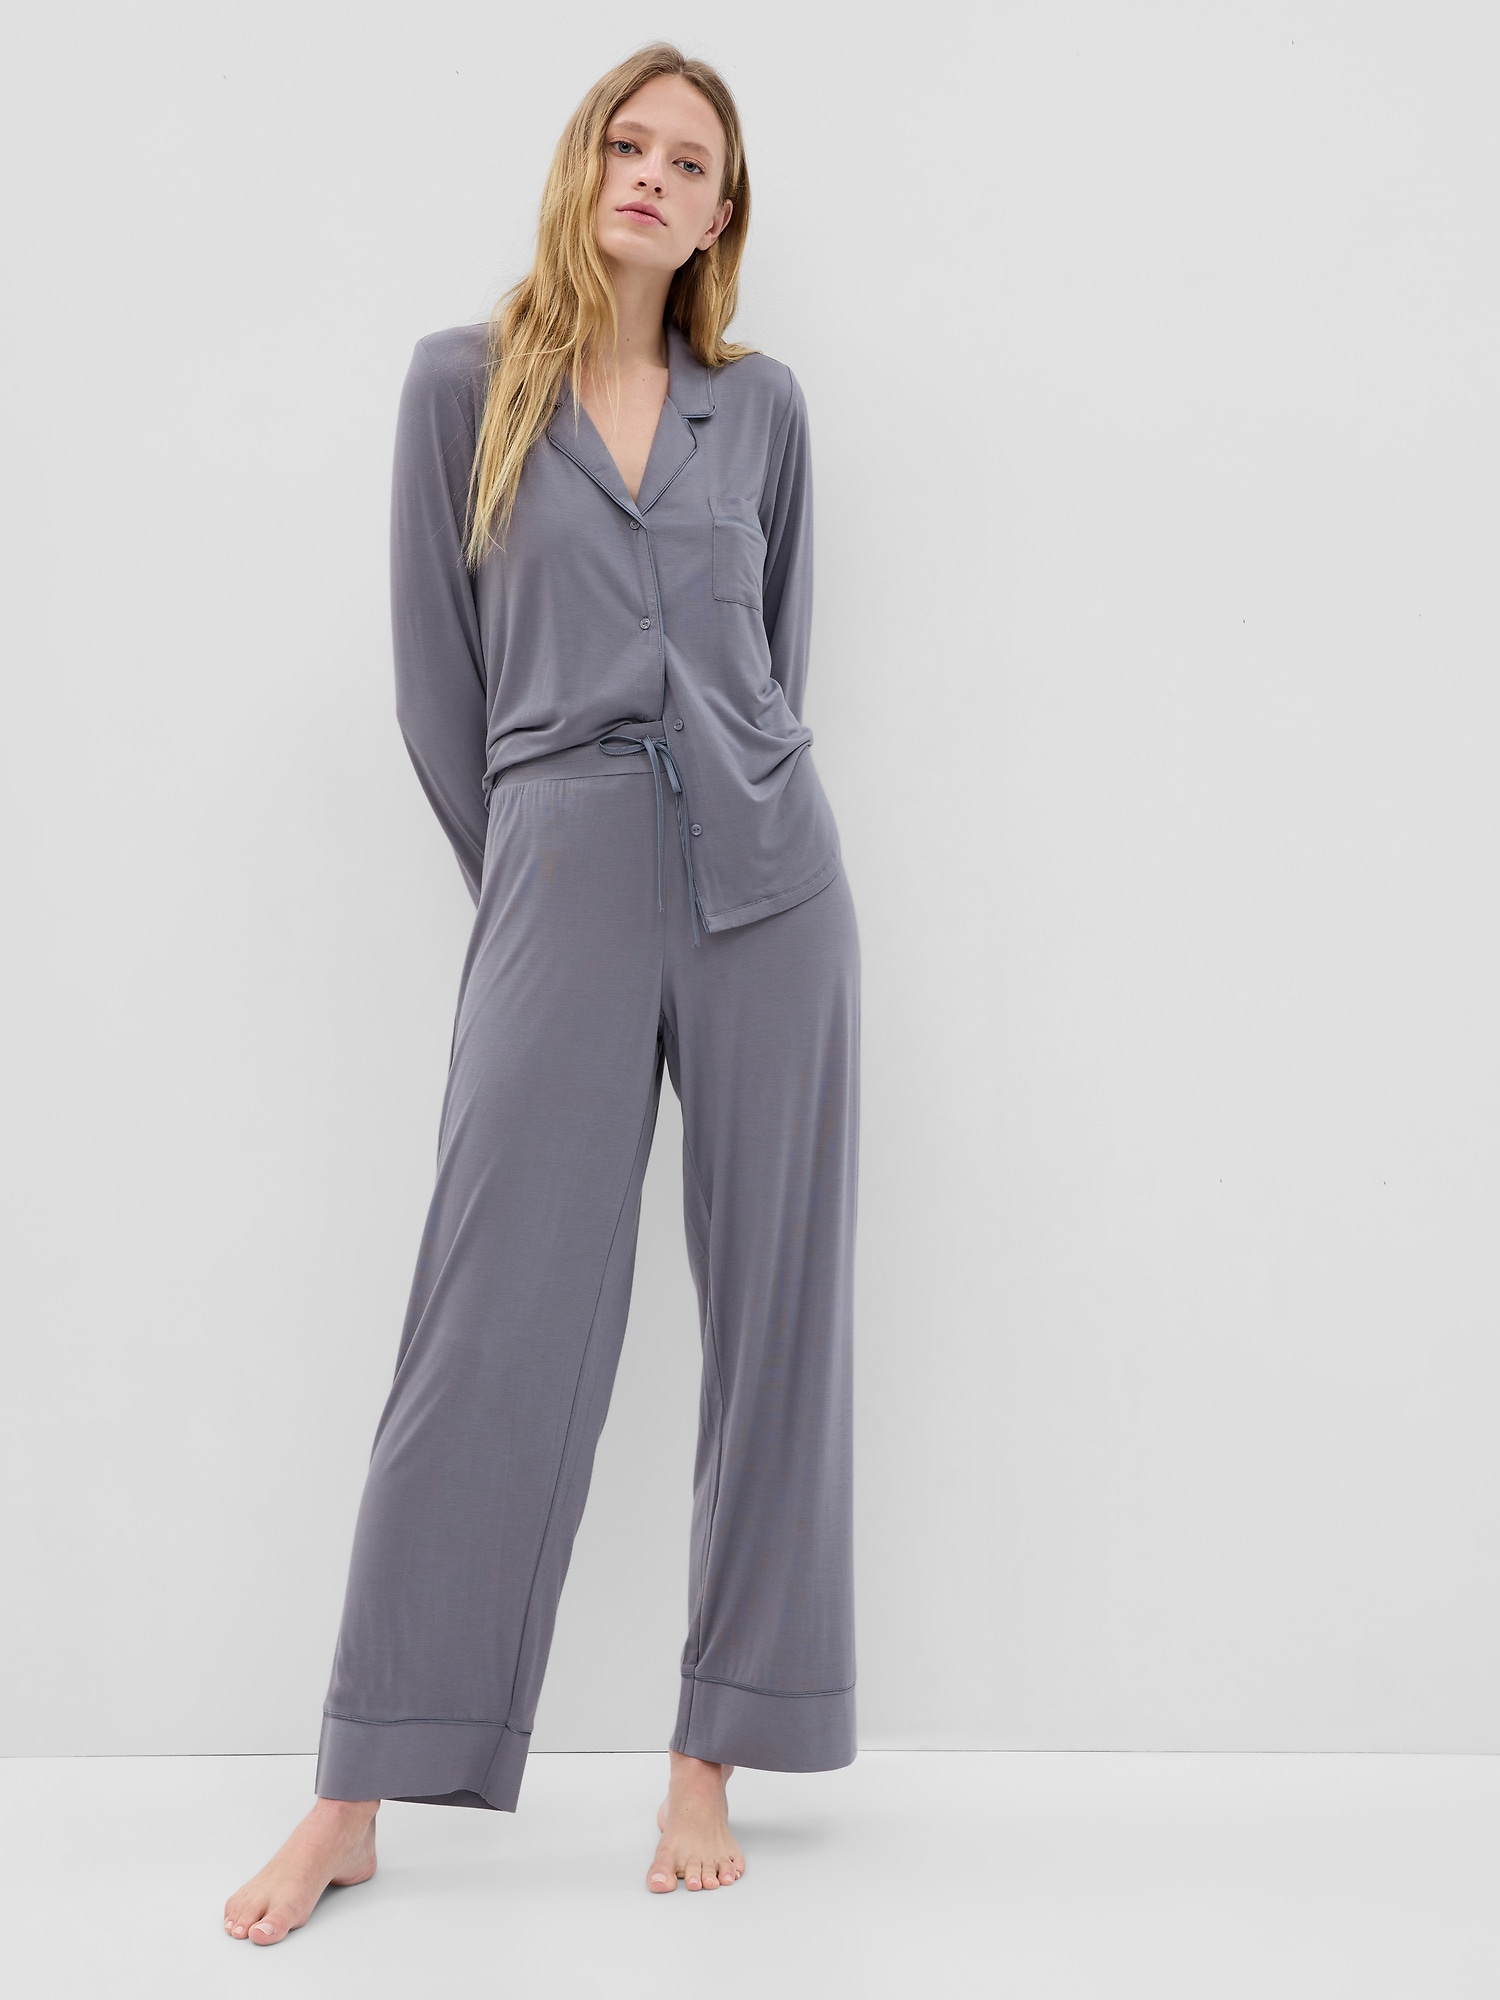 Leggings Depot Modal Pajama Pants for Women